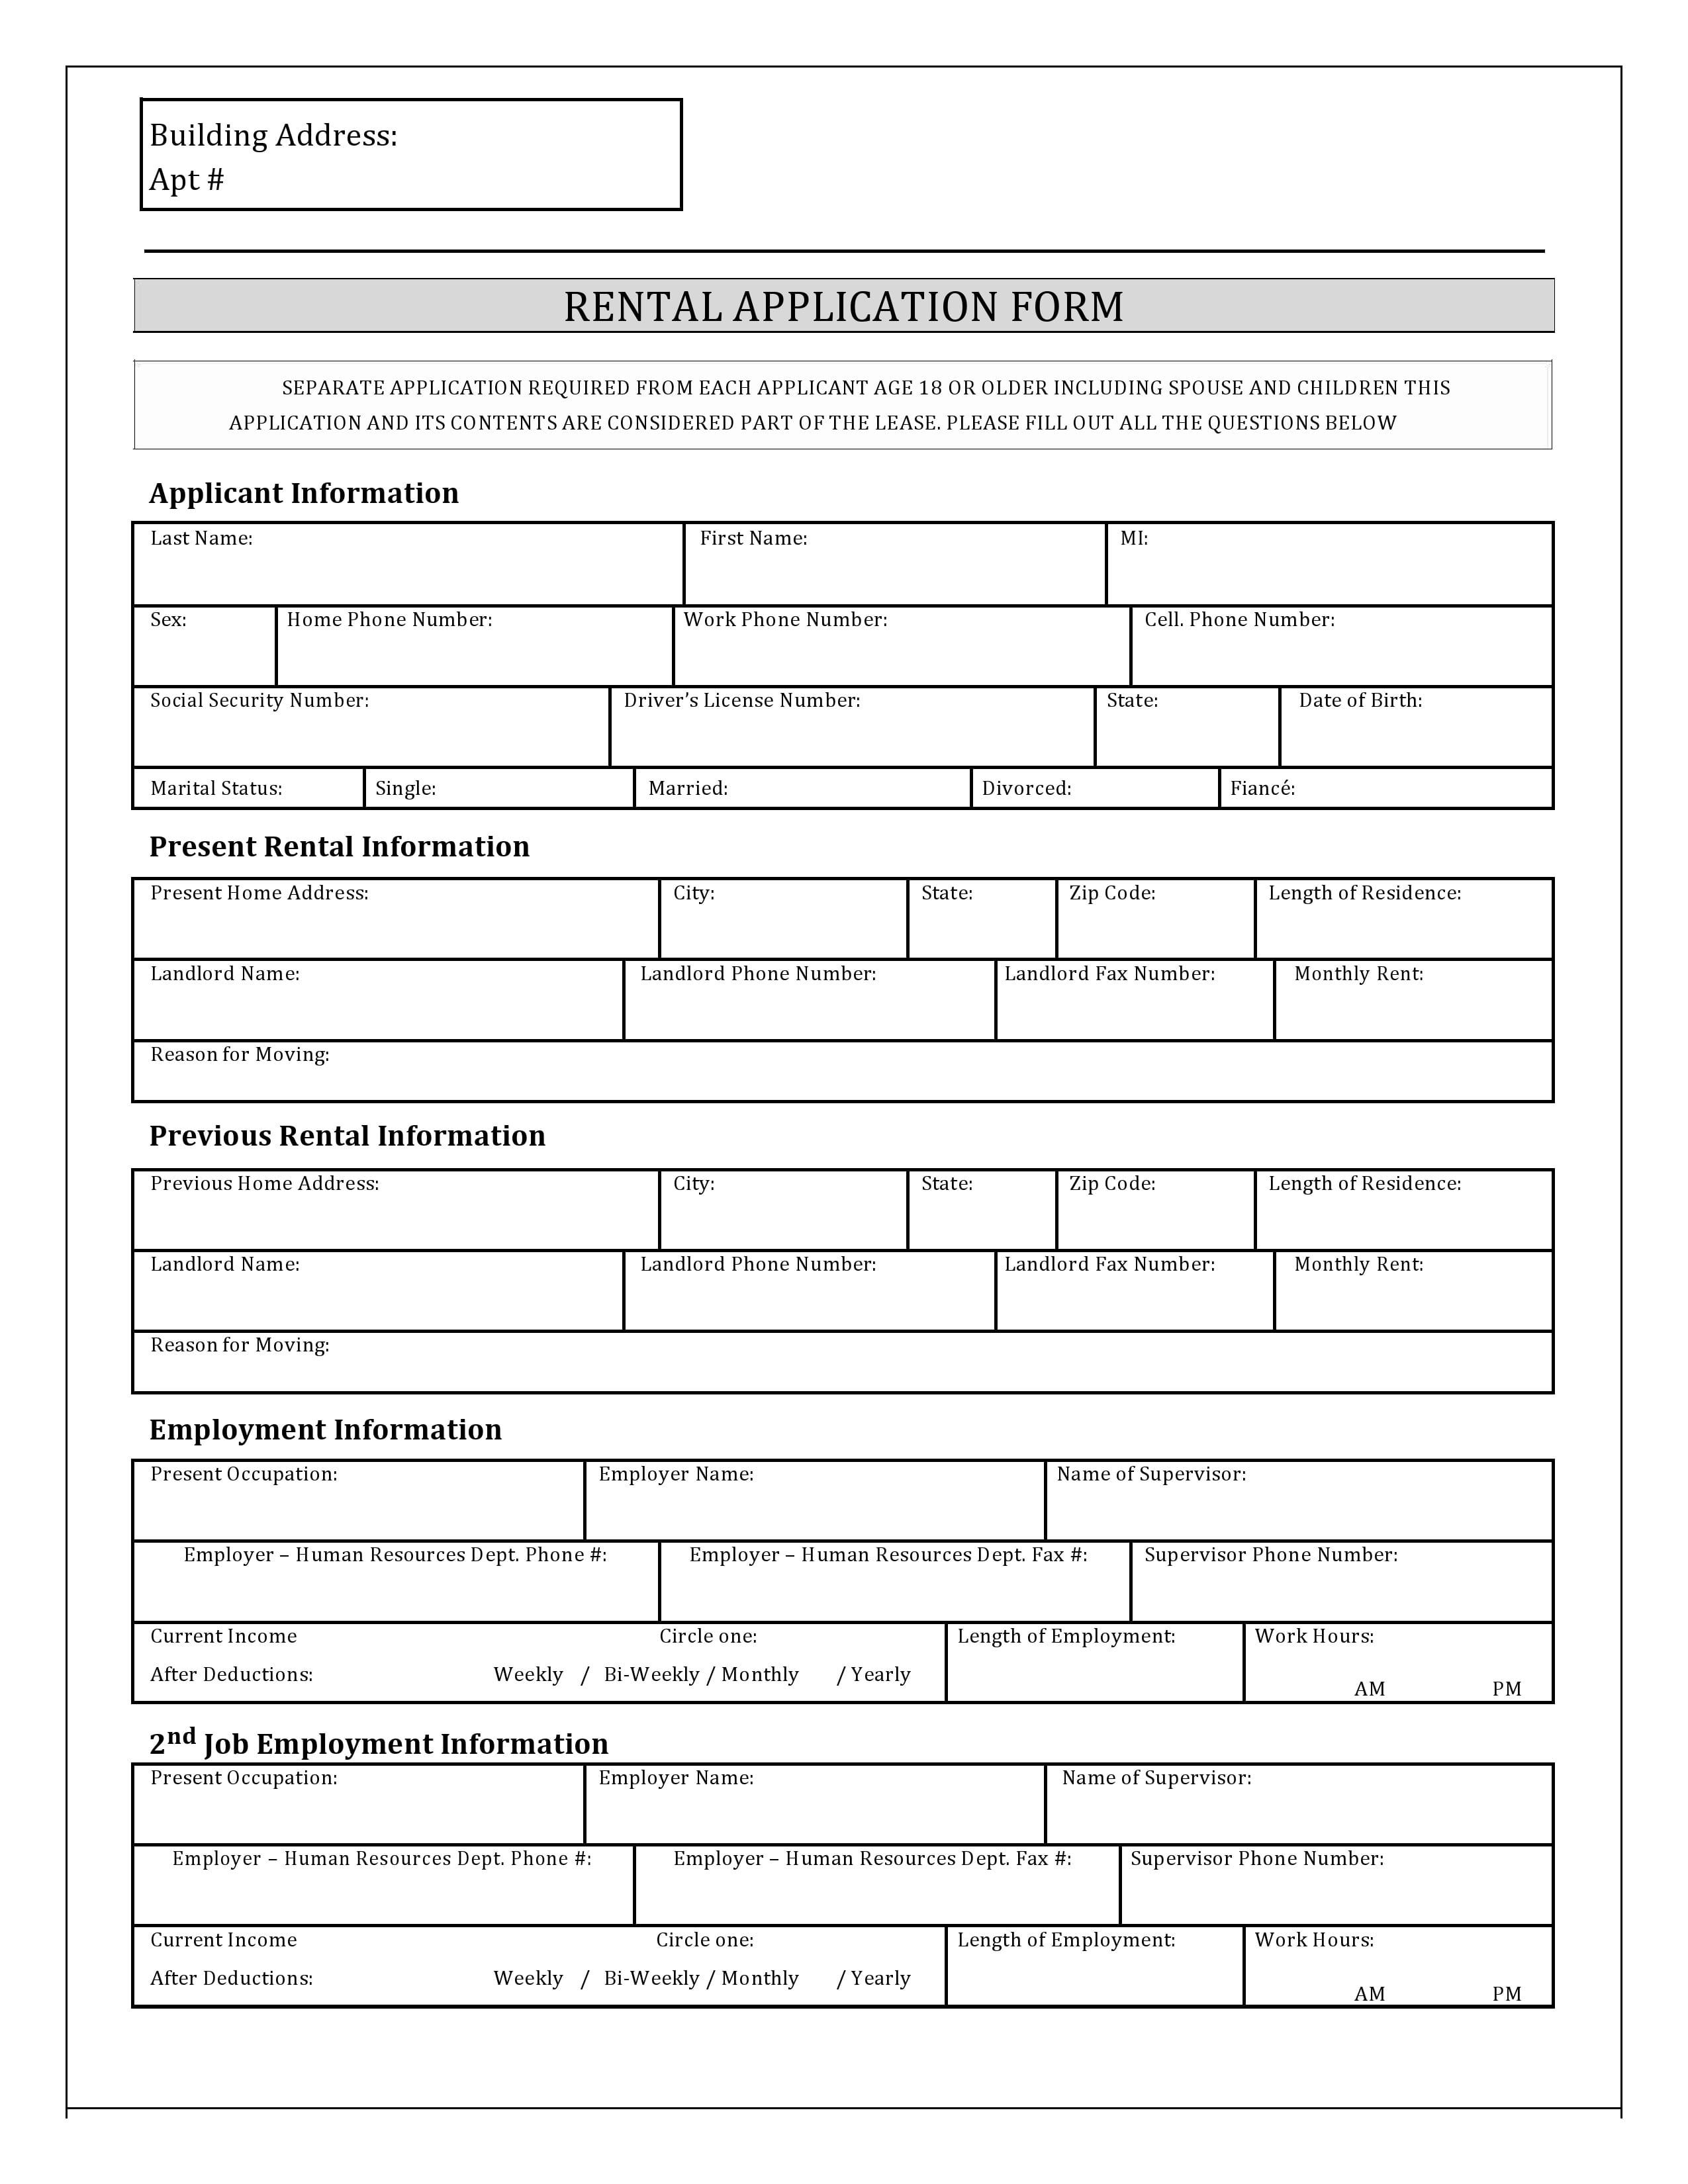 printable-rental-application-form